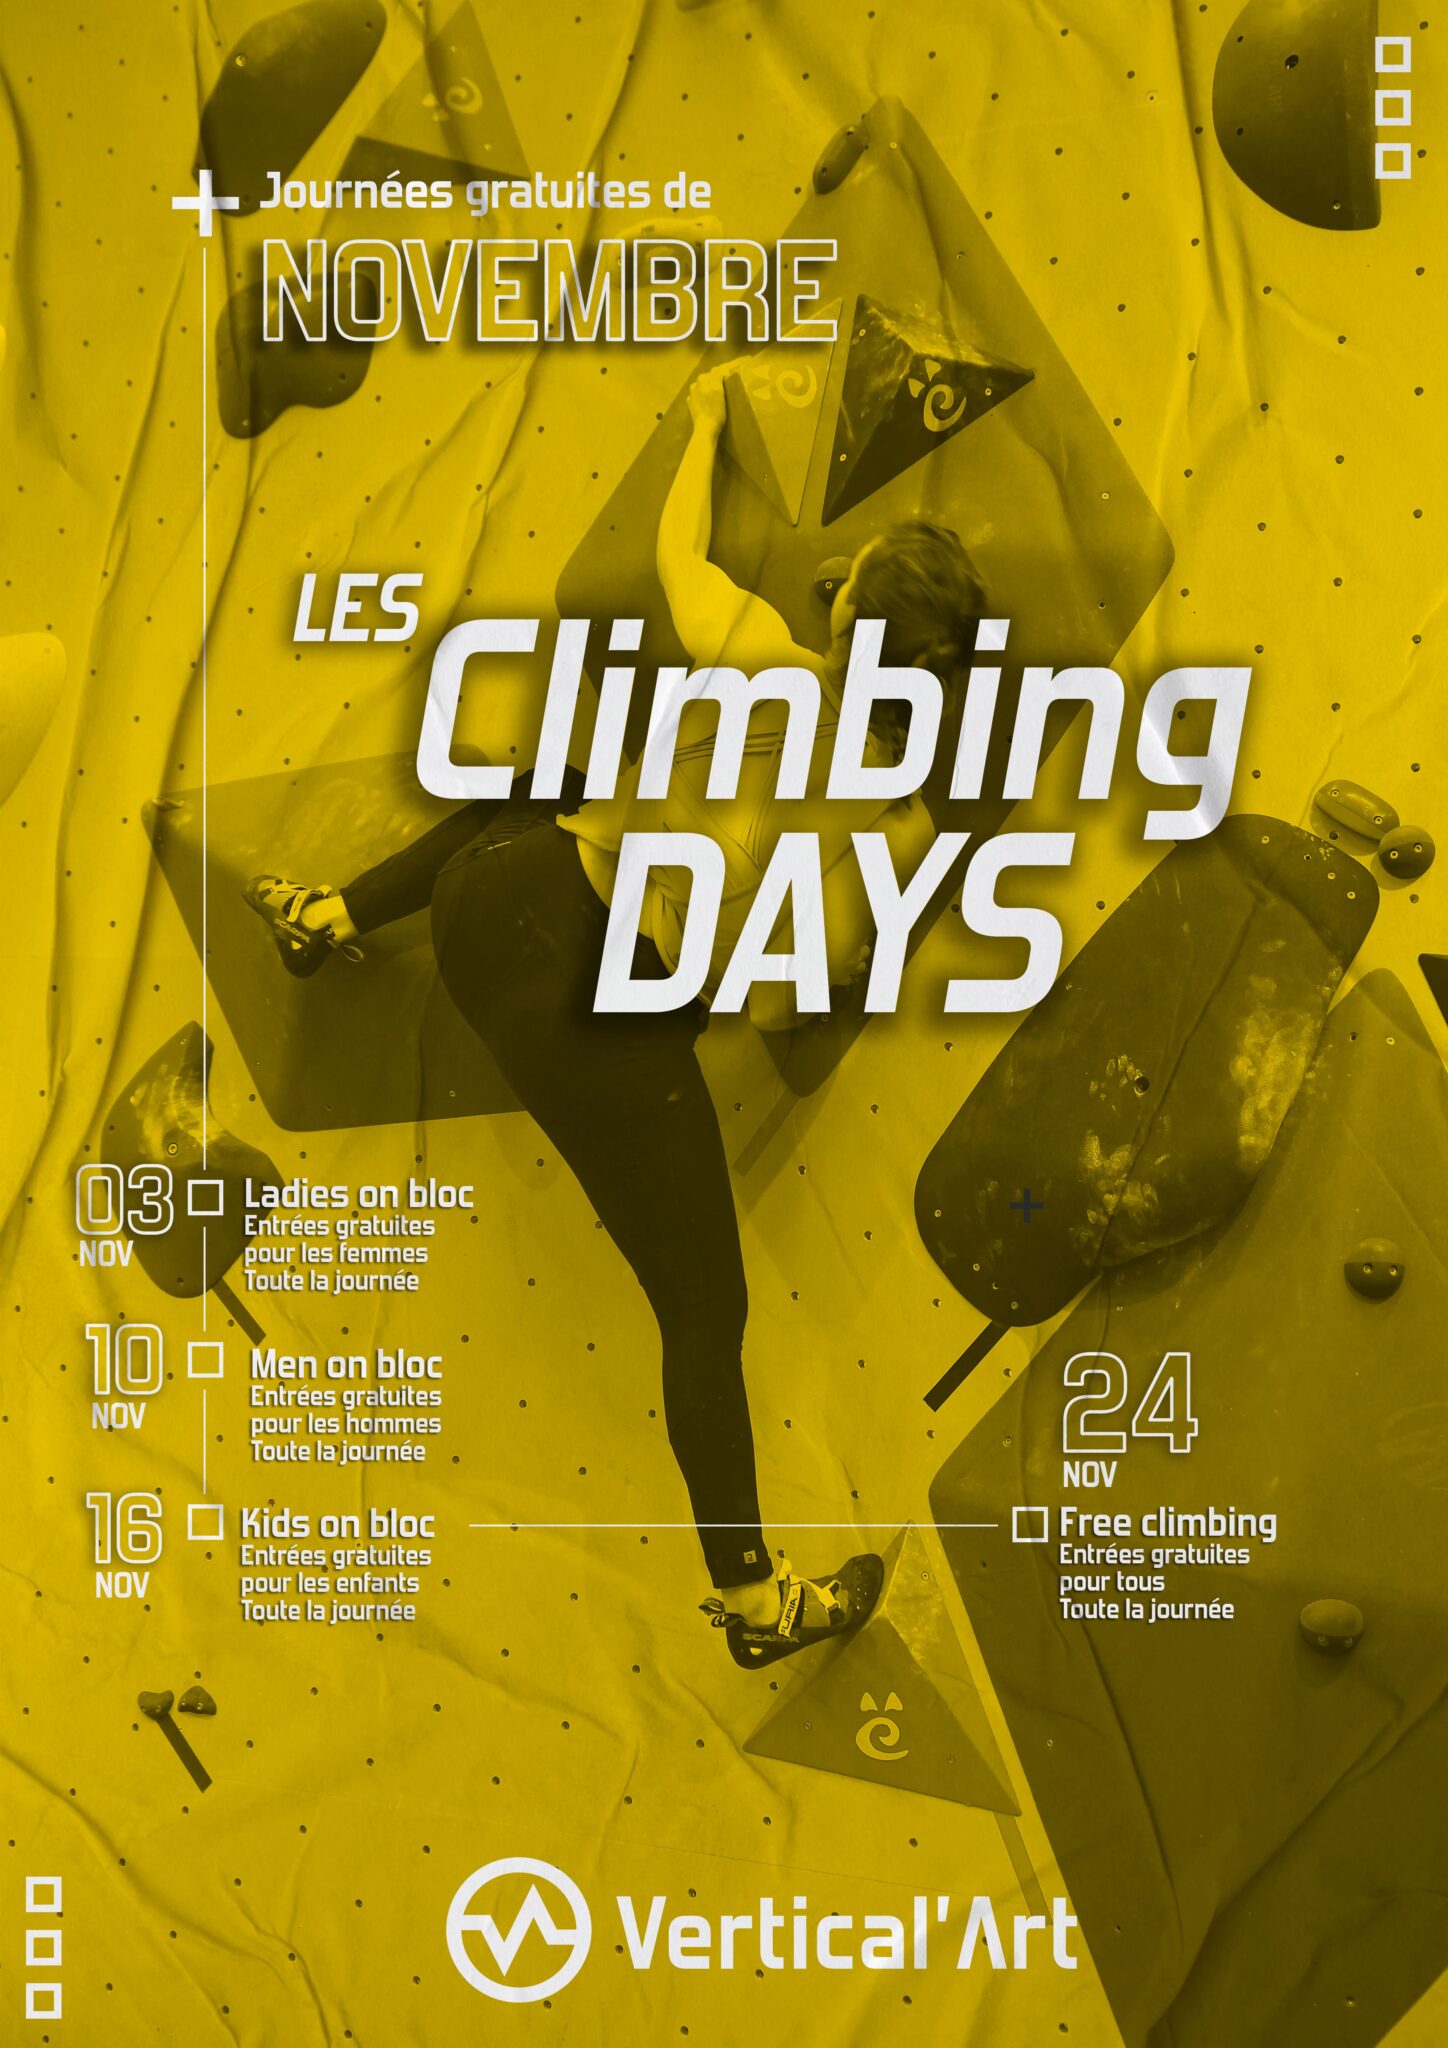 Climbing days à Vertical'Art Lyon Novembre 2022